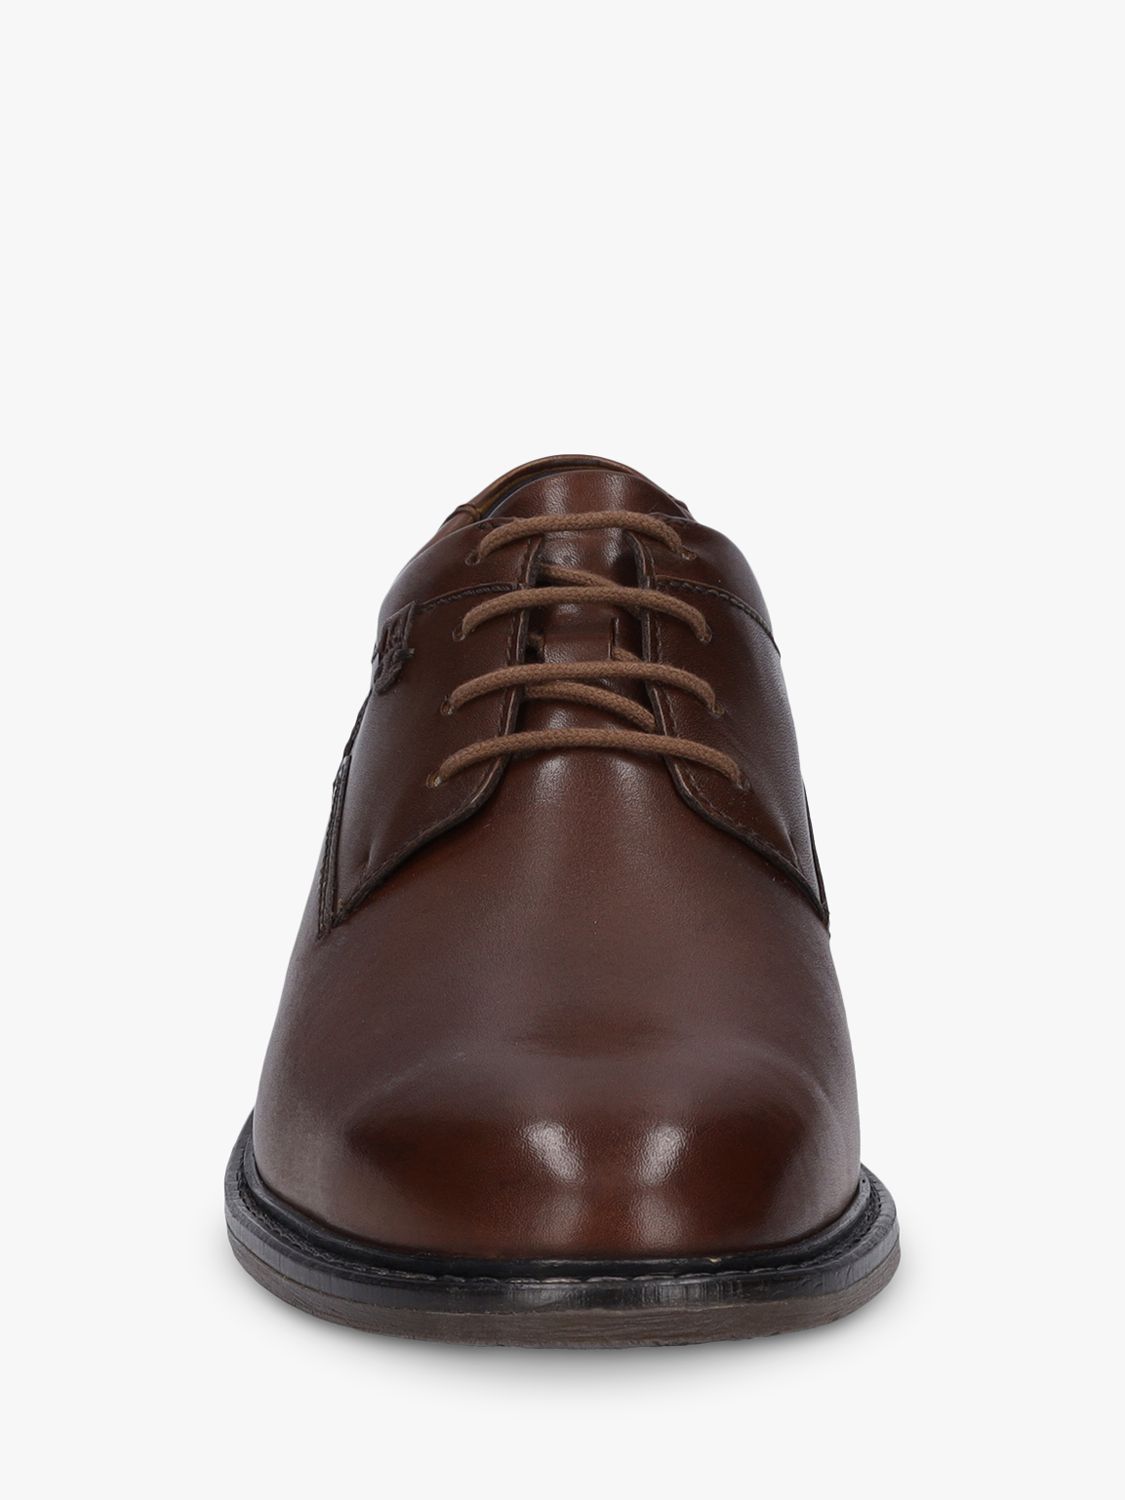 Josef Seibel Earl 05 Leather Oxford Shoes, Cognac, 8